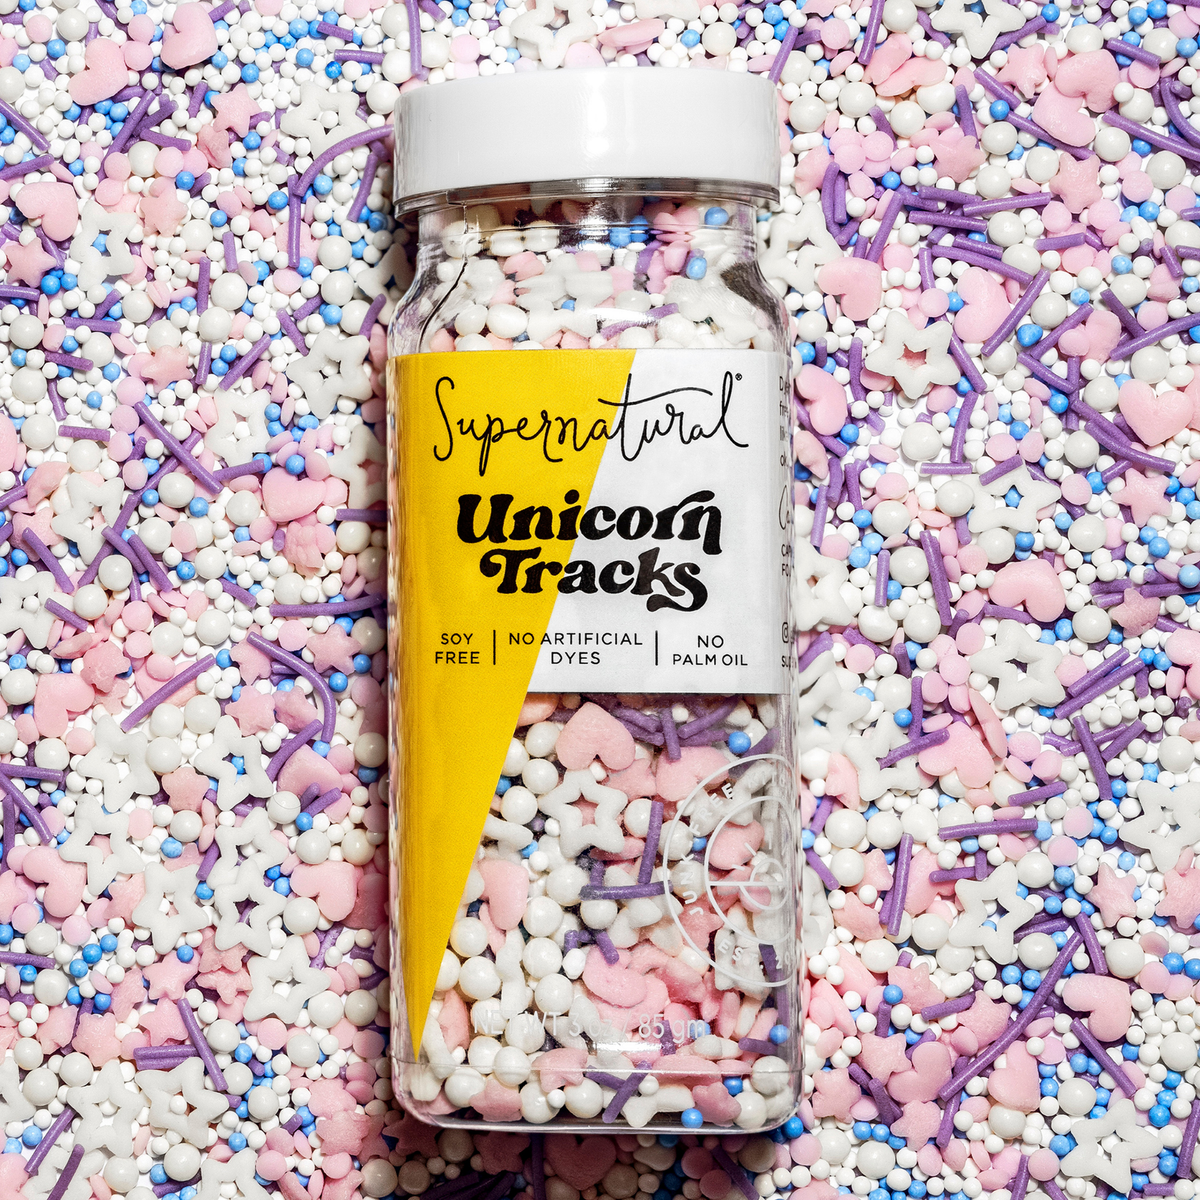 Dye-Free Unicorn Sprinkles - Supernatural, Inc -bluecashew kitchen homestead